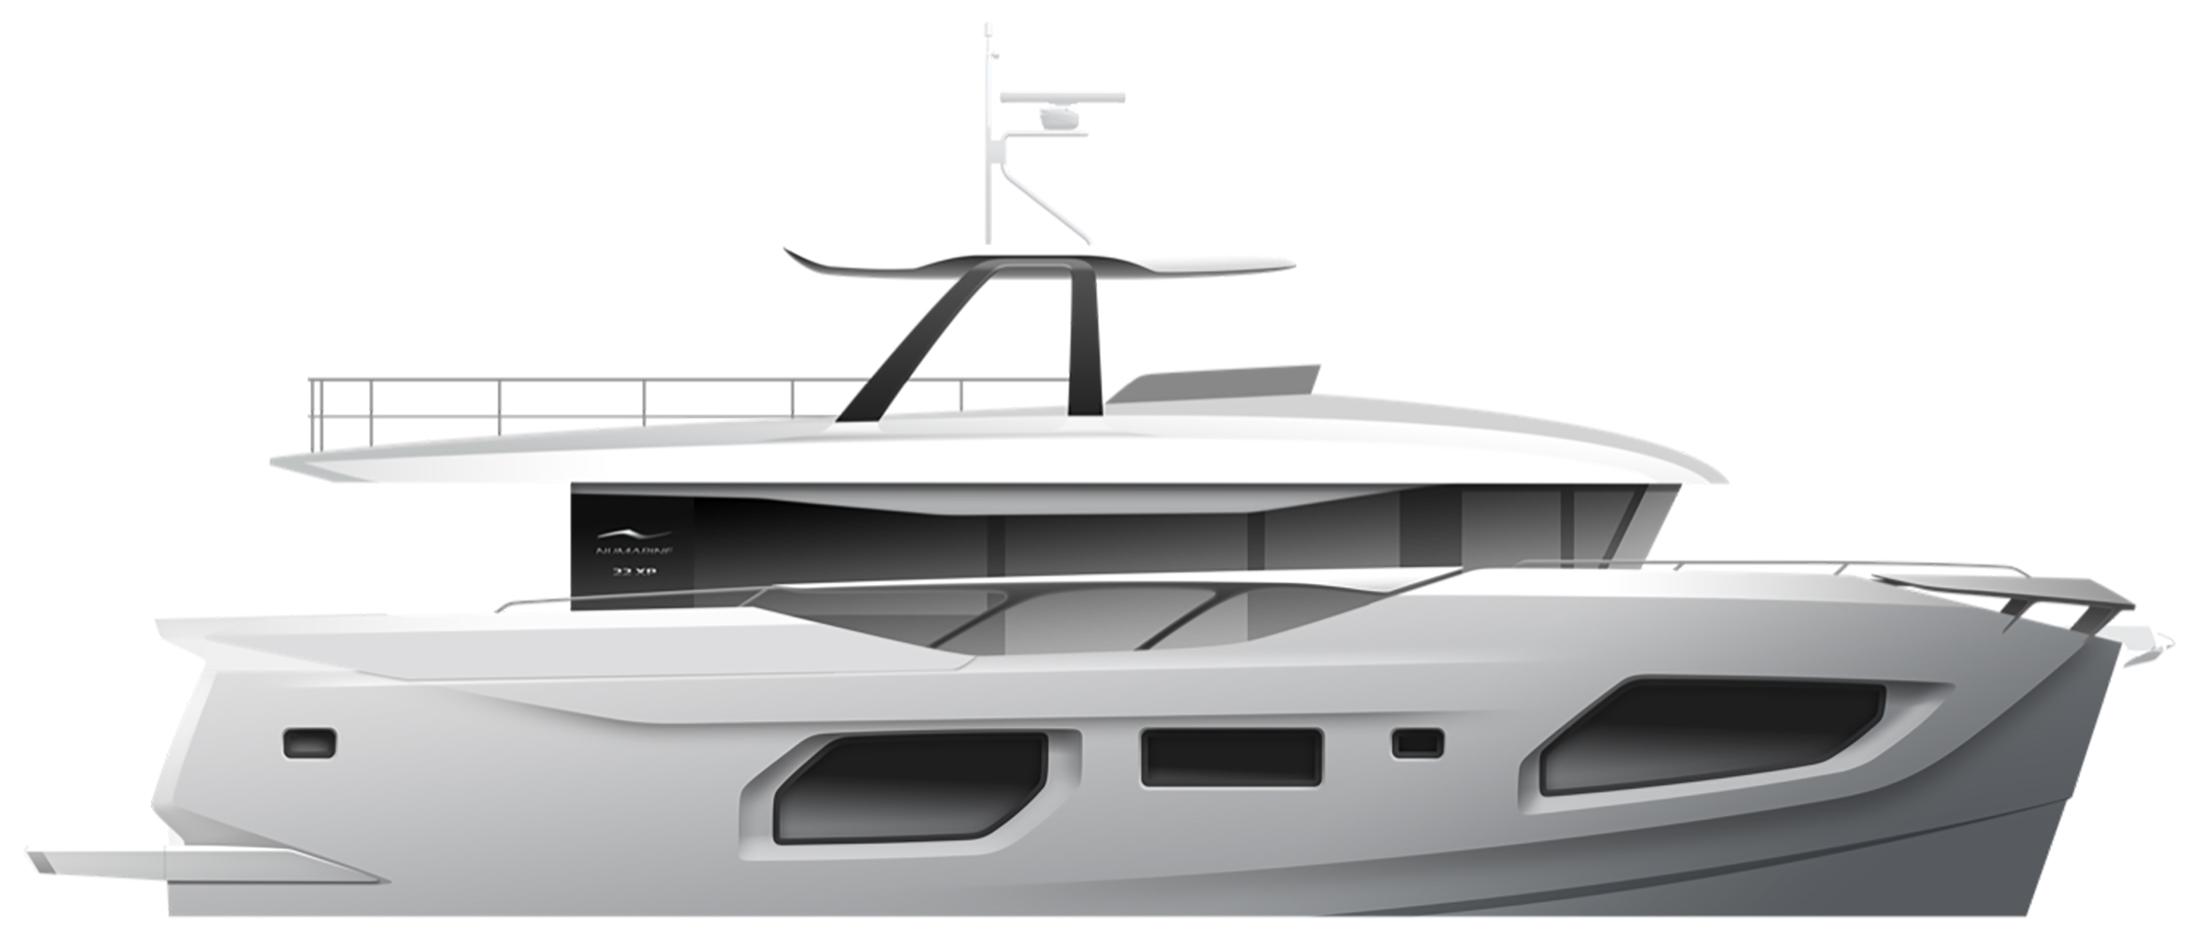 The new 22XP Yacht